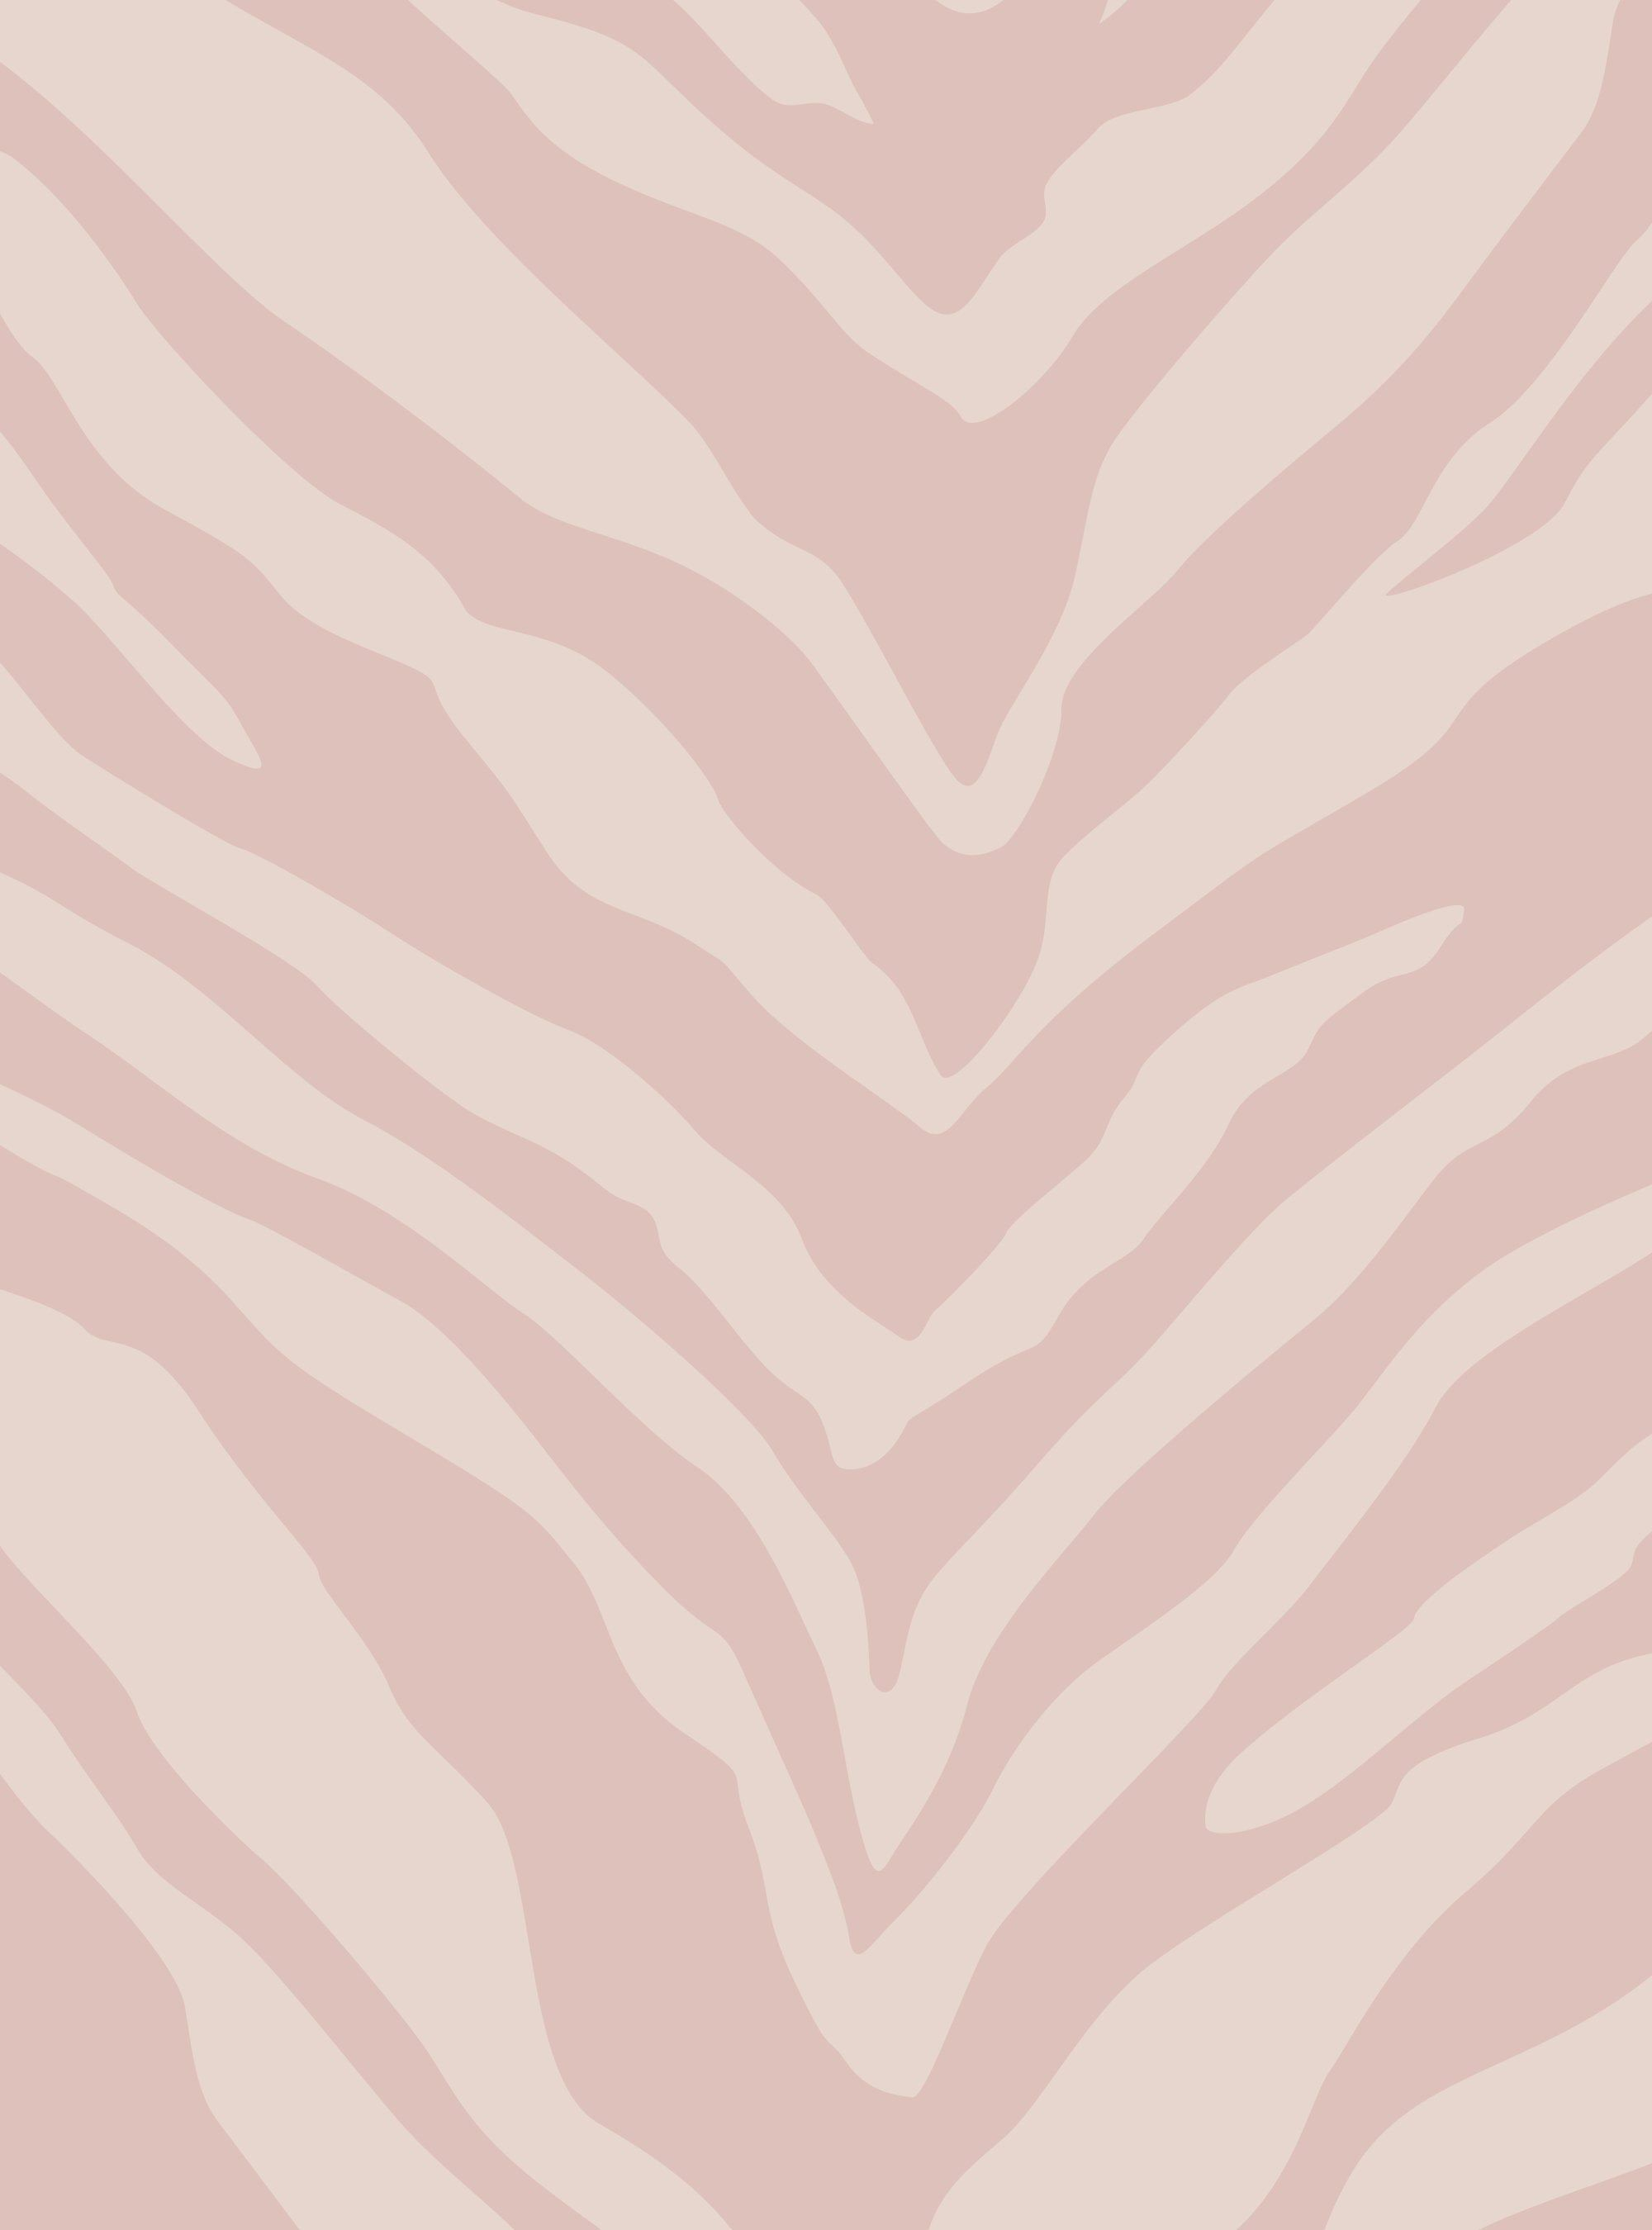 2000x2700 Zebra Print Wallpaper Pink Self Adhesive Fabric Etsy in 2022 | Zebra print wallpaper, Print wallpaper, Pink zebra wallpaper